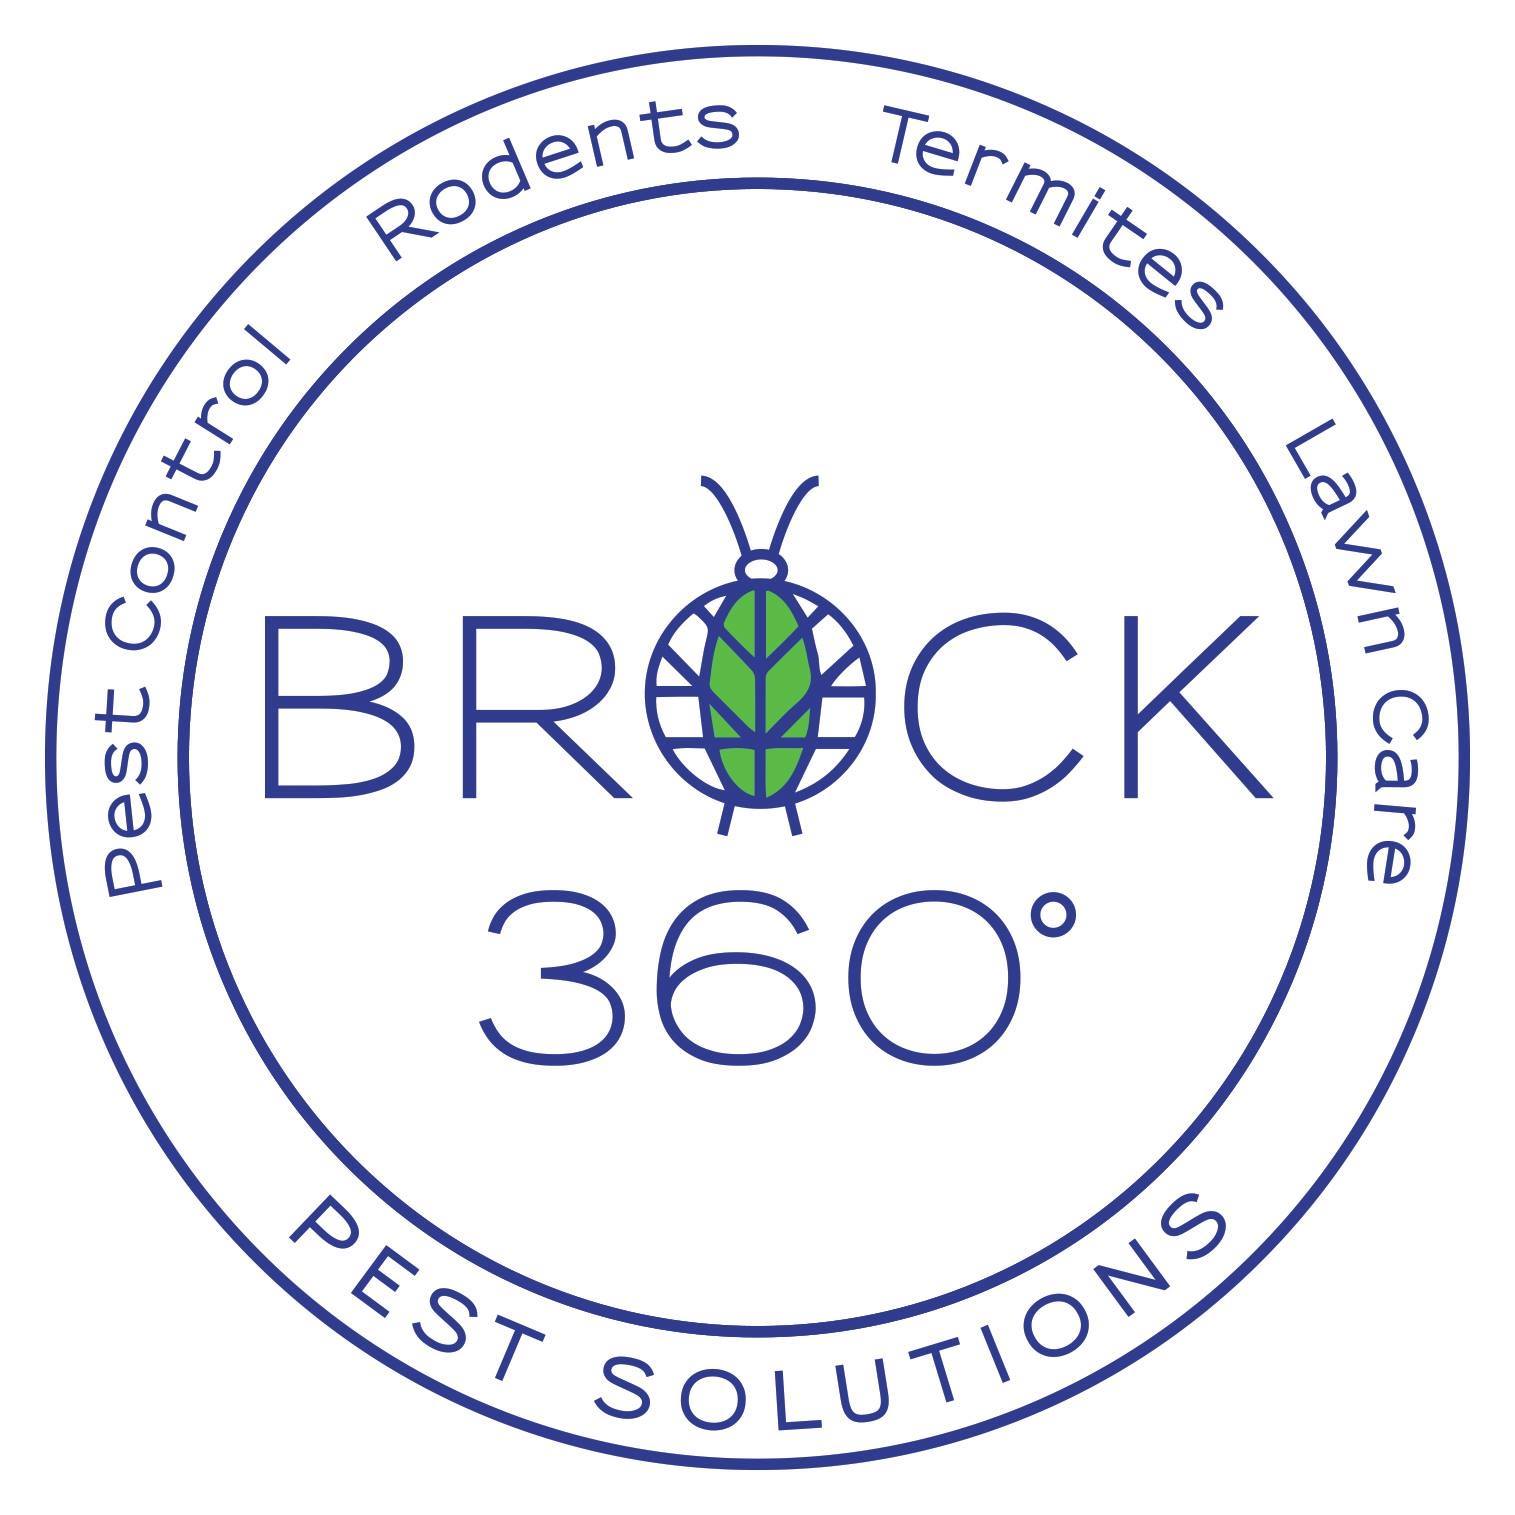 Brock 360 Pest Solutions